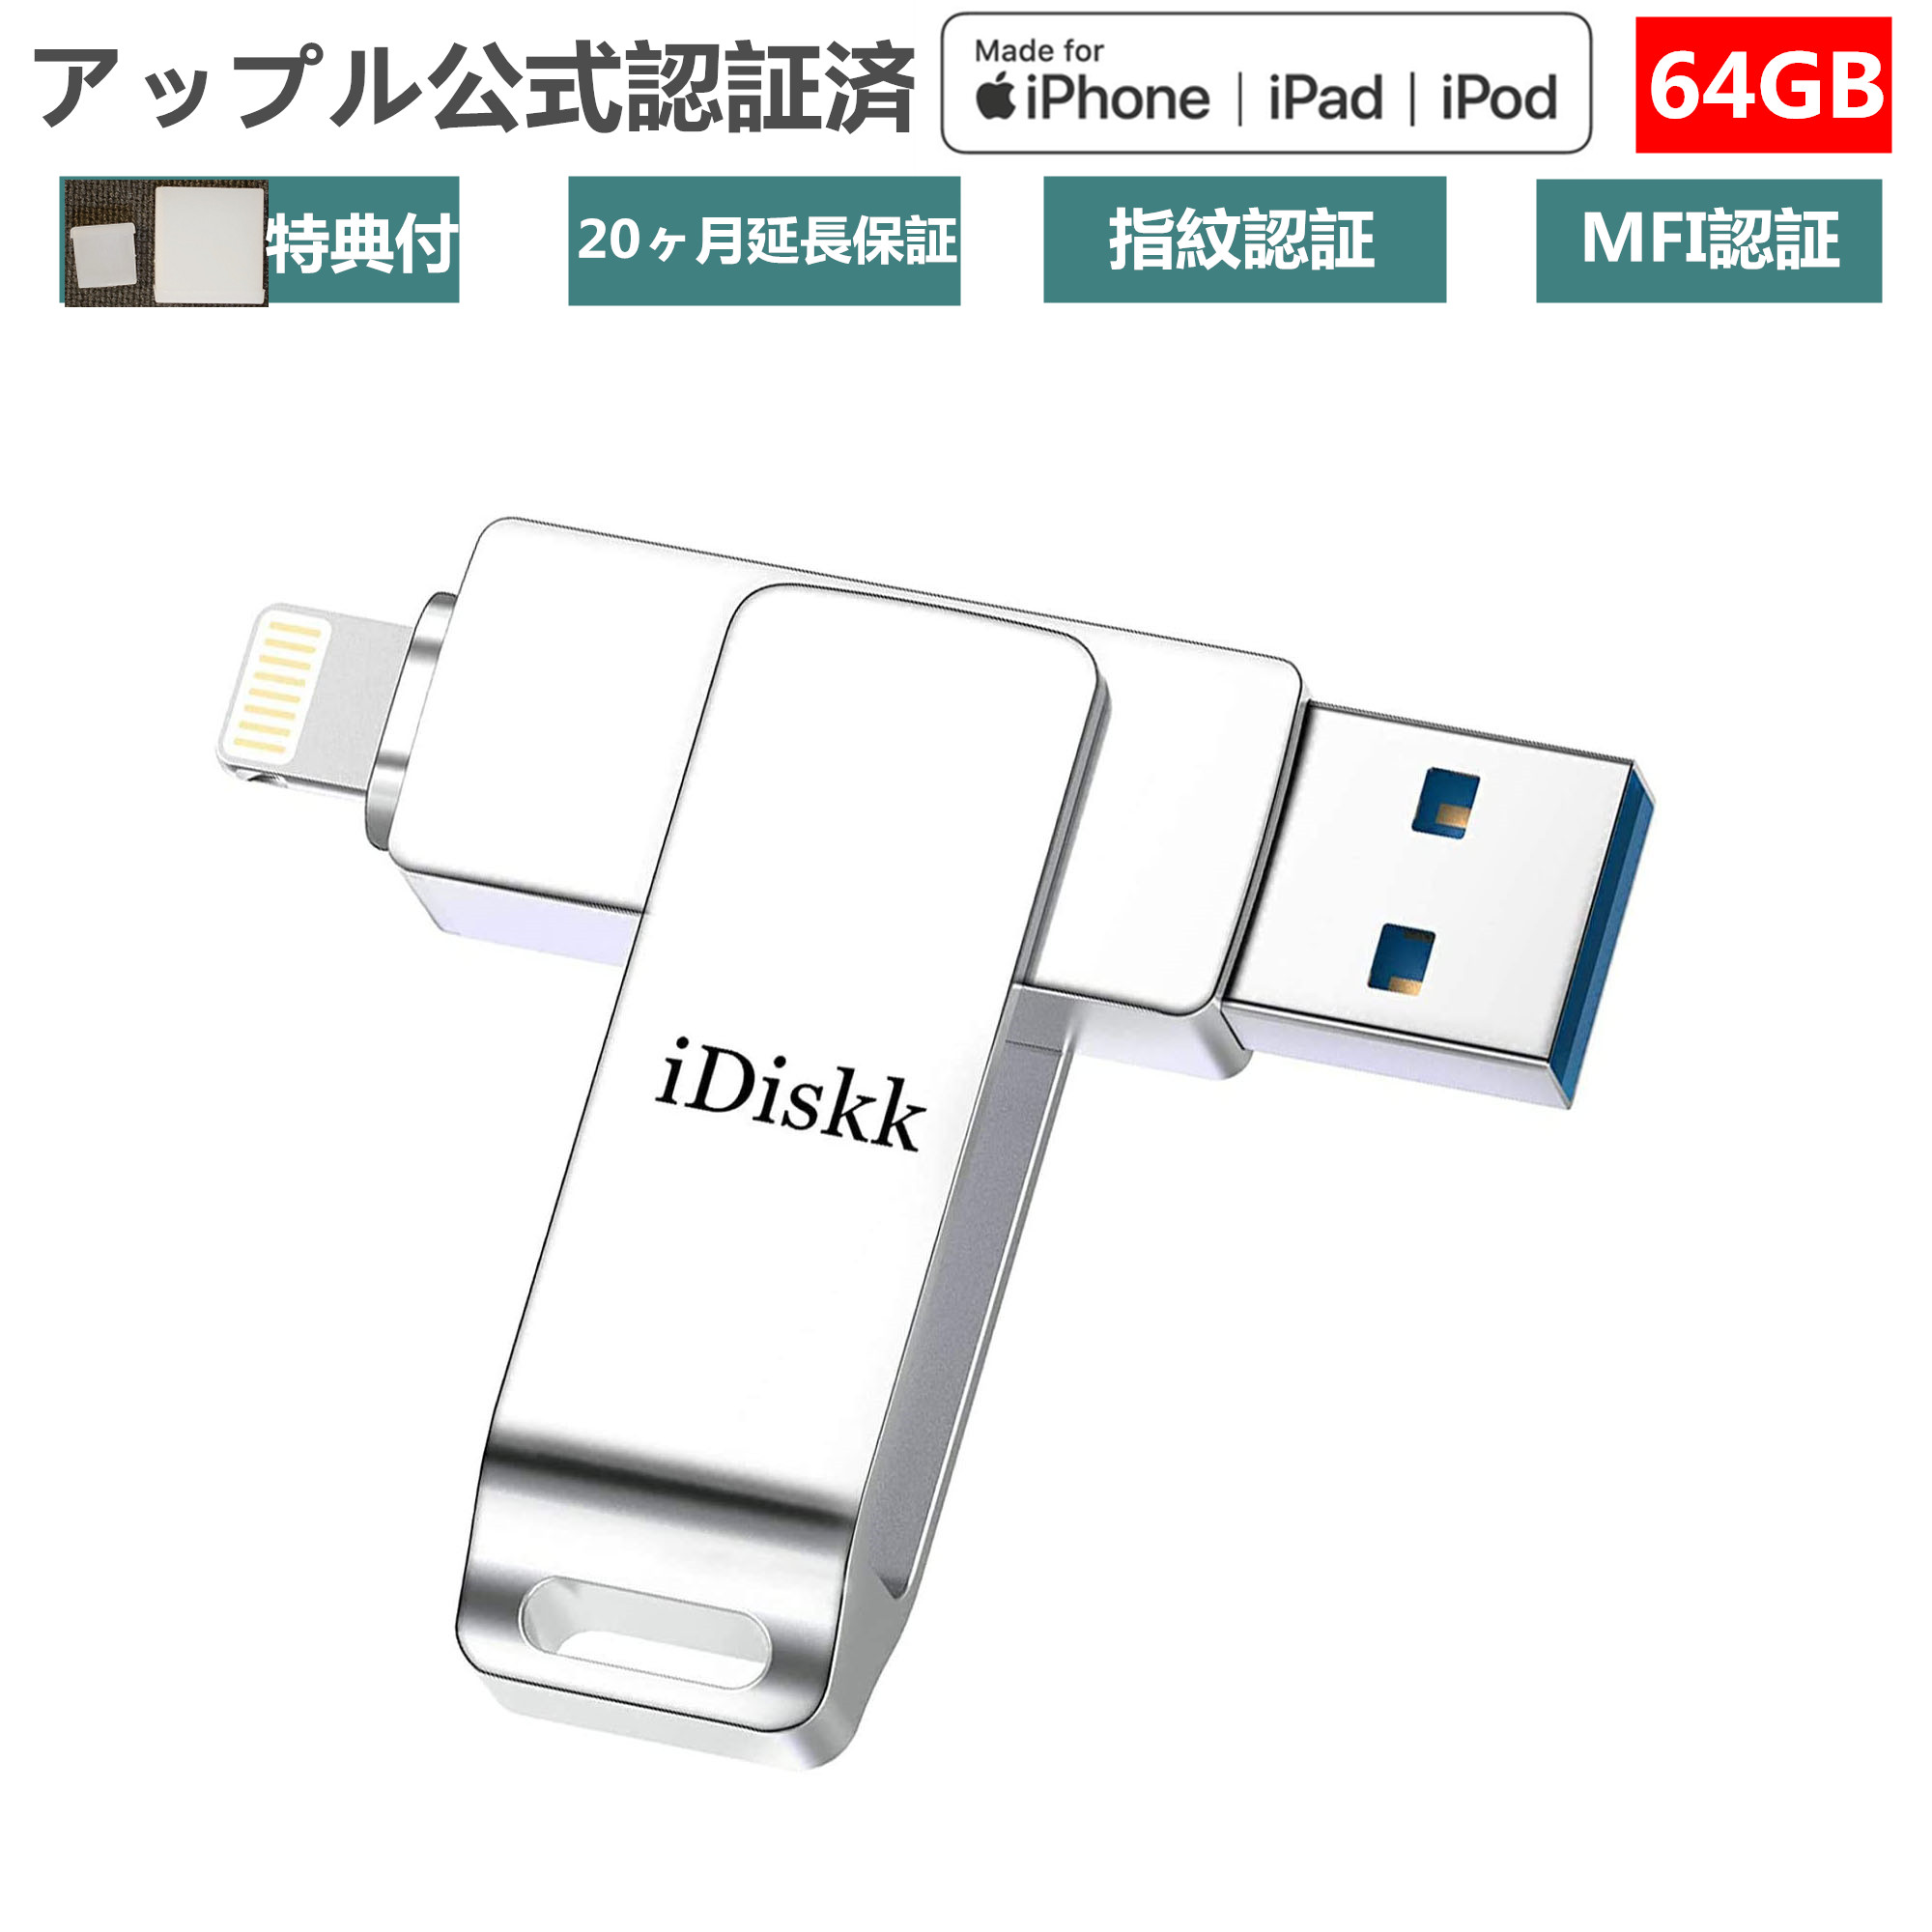 Apple MFi 認証 512GB iPhone USBメモリ フラッシュドライブ iPhone メモリー USB iPhone メモリ - 3